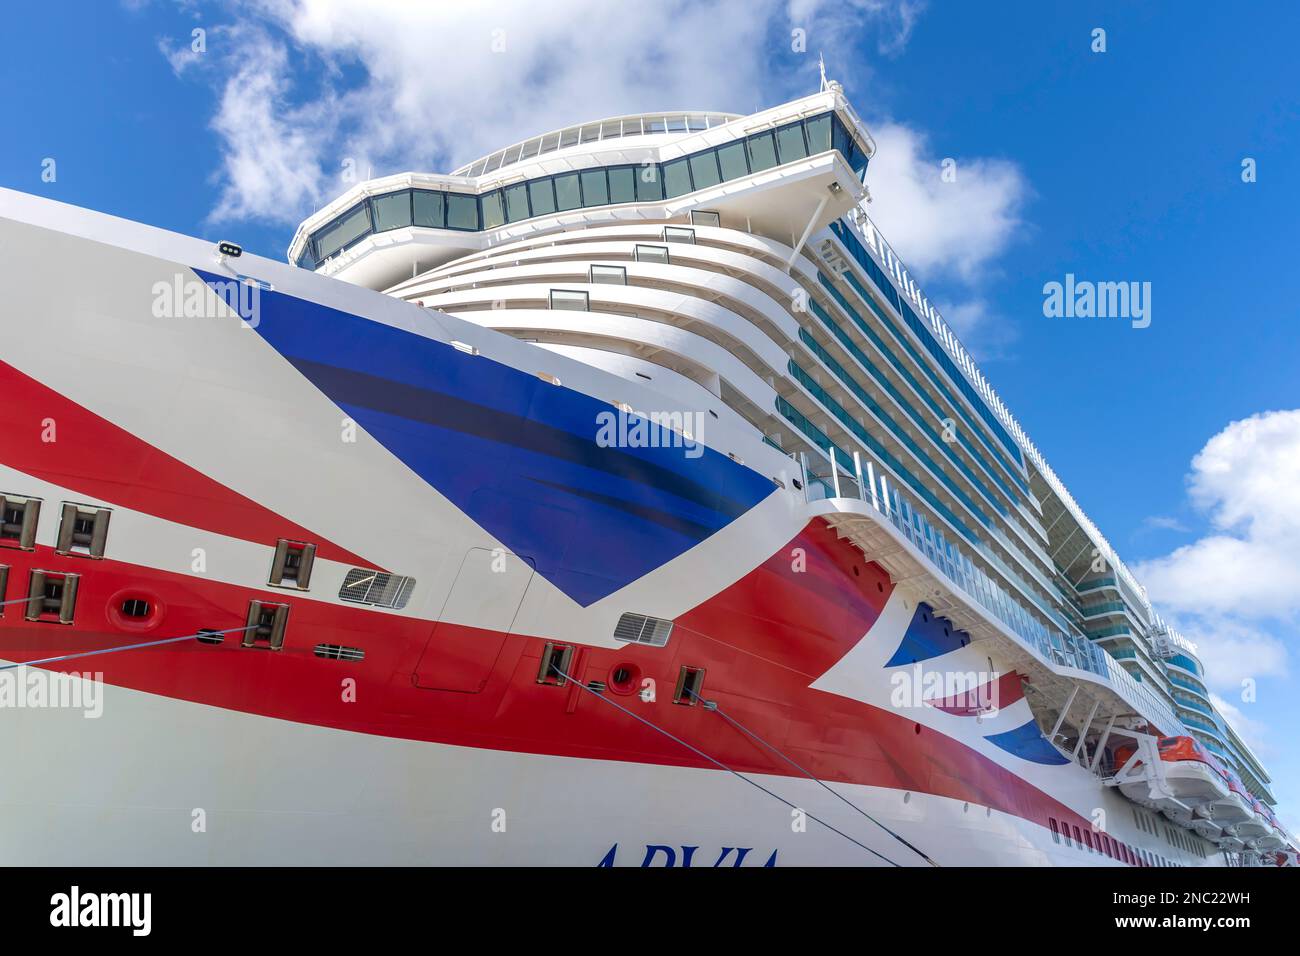 P&O Arvia Cruise Ship berthed in dock, St John’s, Antigua, Antigua and Barbuda, Lesser Antilles, Caribbean, Caribbean Stock Photo